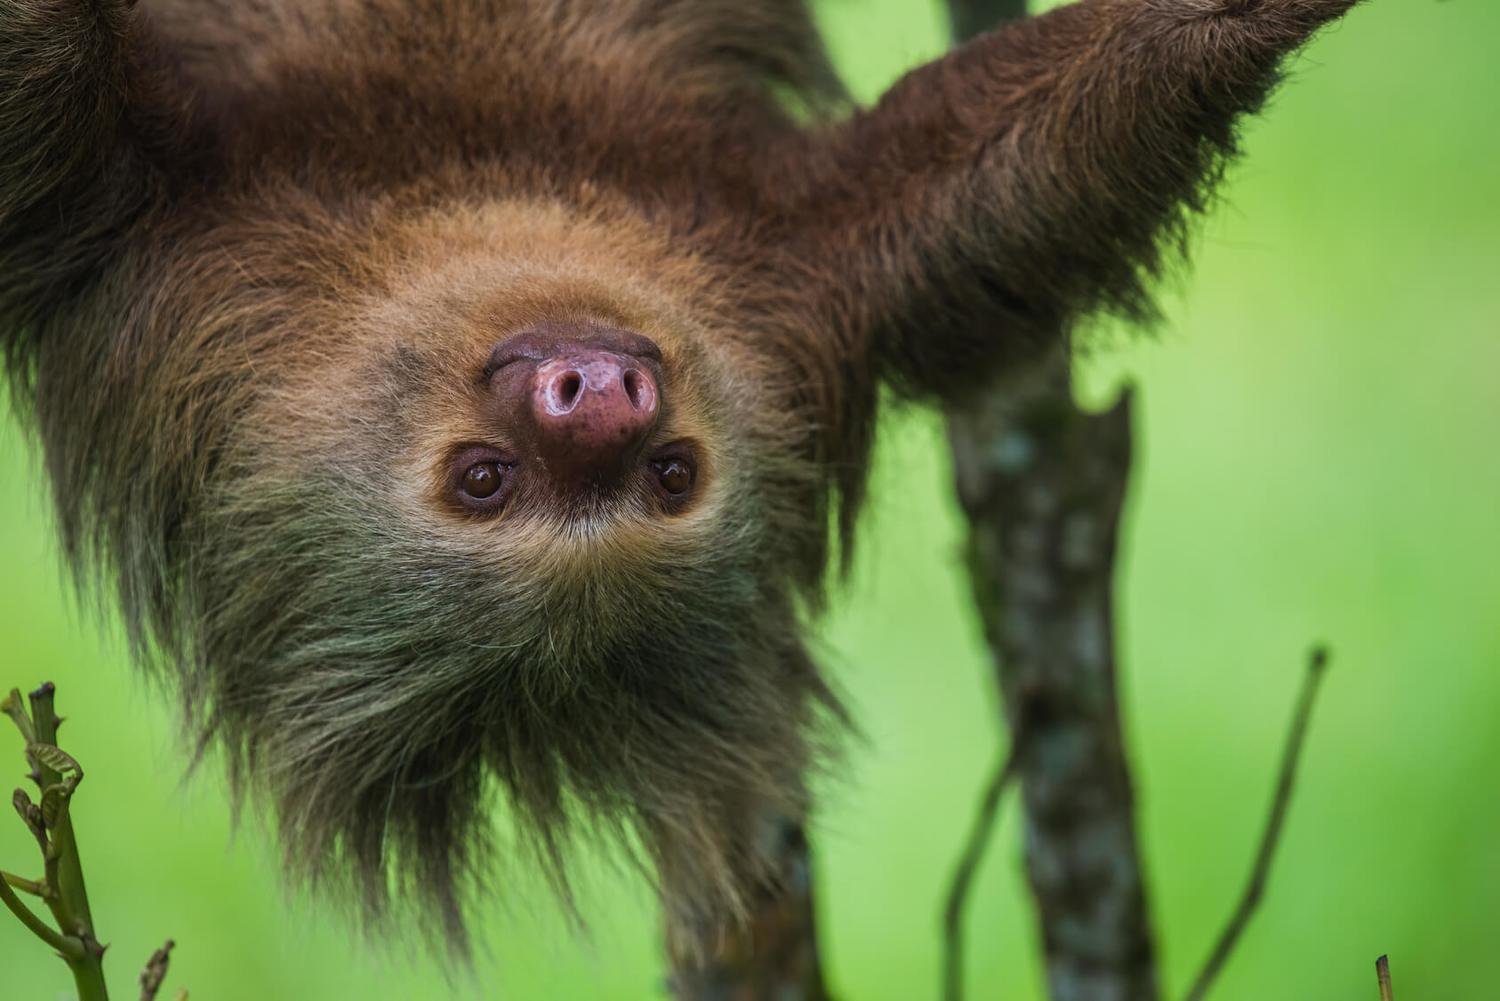 Adopt A Three-Toed Sloth